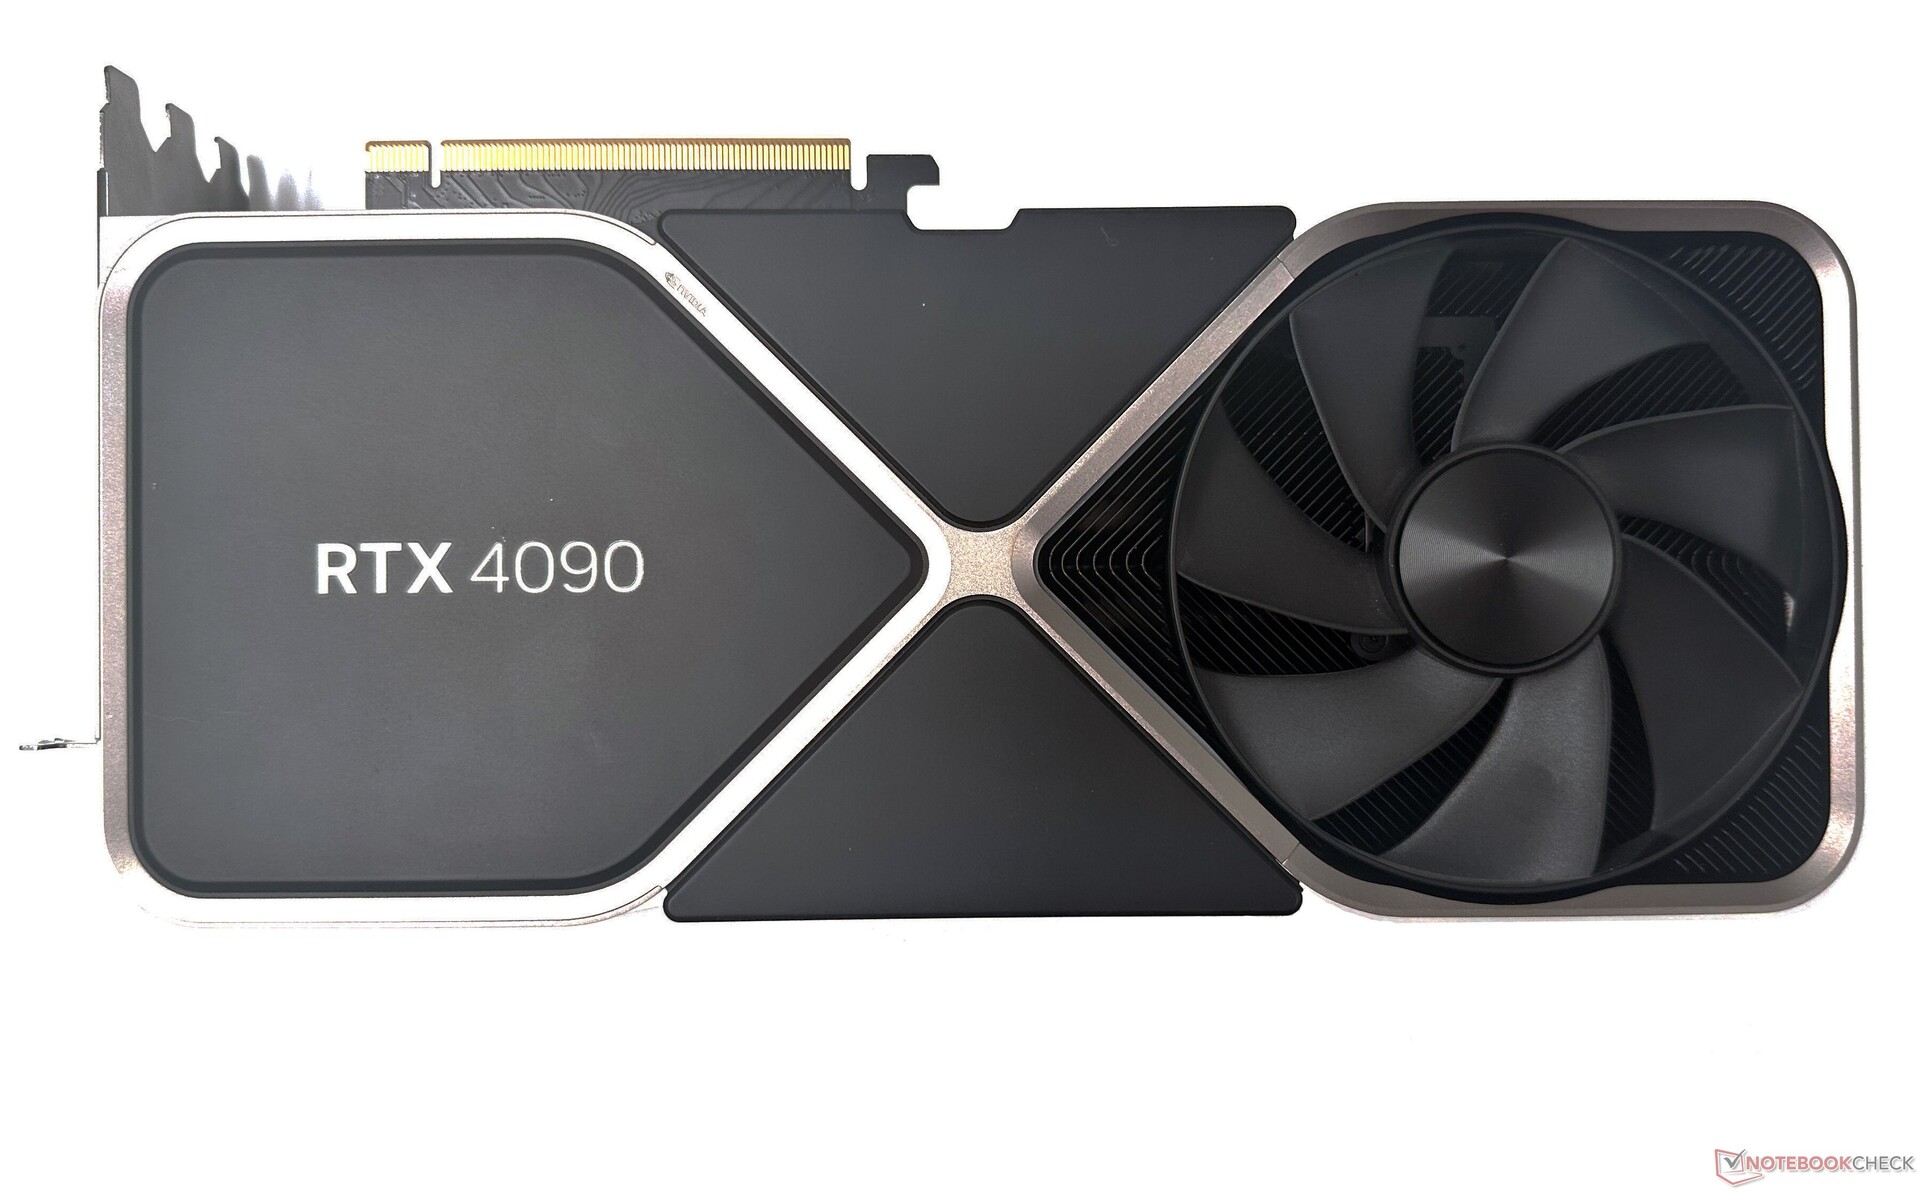 NVIDIA GeForce RTX 4080 SUPER, RTX 4070 Ti SUPER, RTX 4070 SUPER teased